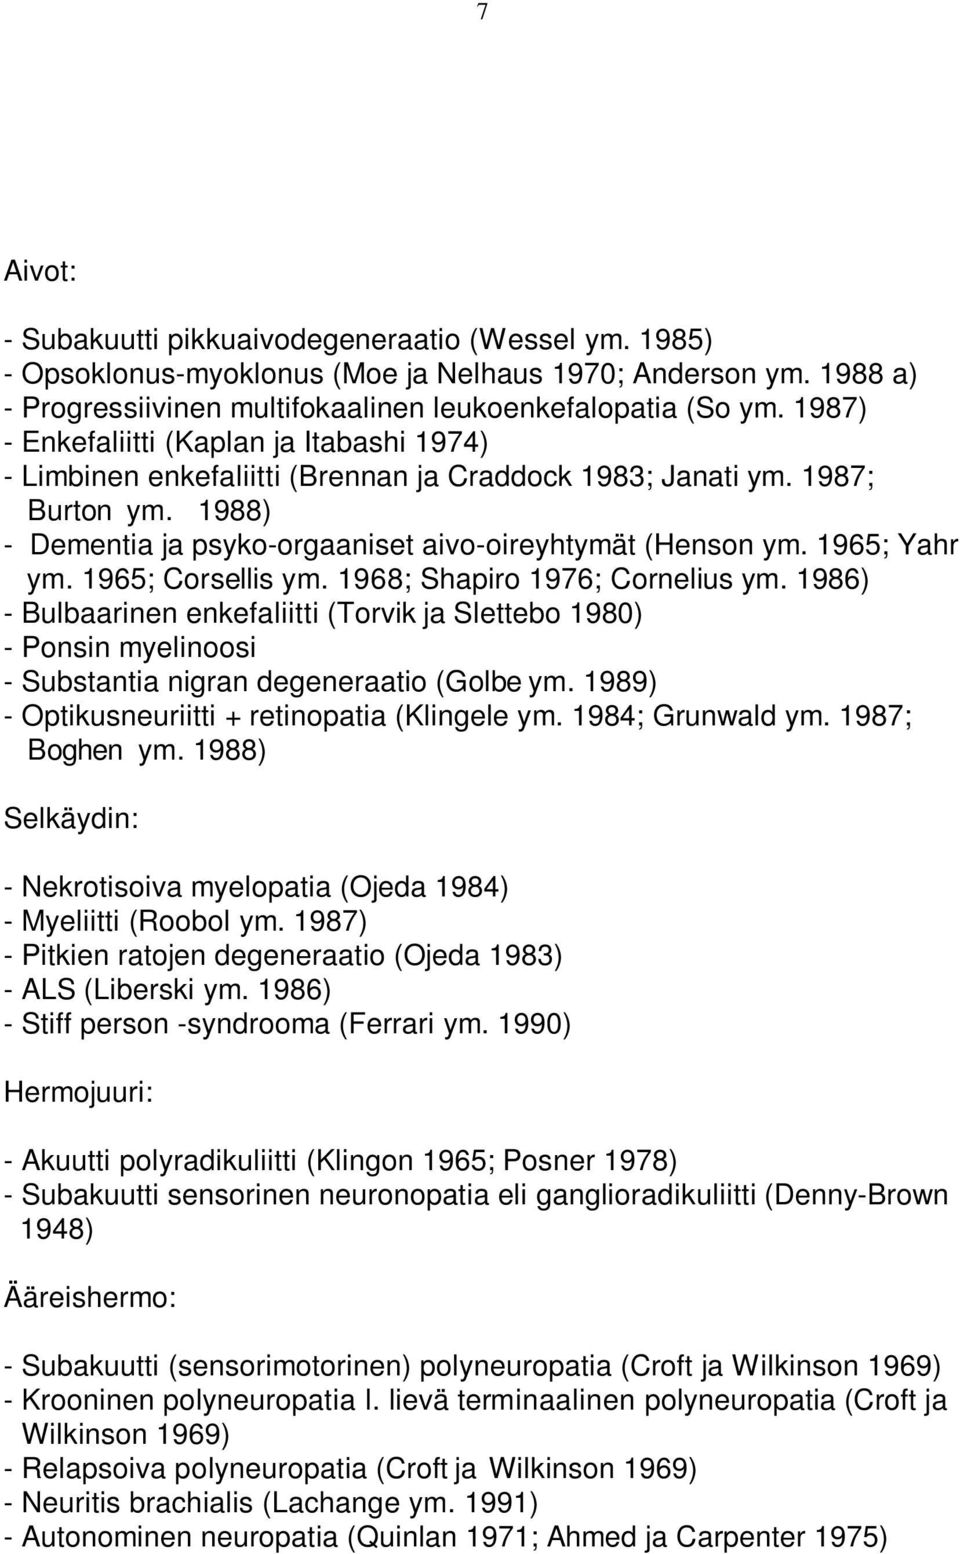 1965; Yahr ym. 1965; Corsellis ym. 1968; Shapiro 1976; Cornelius ym. 1986) - Bulbaarinen enkefaliitti (Torvik ja Slettebo 198) - Ponsin myelinoosi - Substantia nigran degeneraatio (Golbe ym.